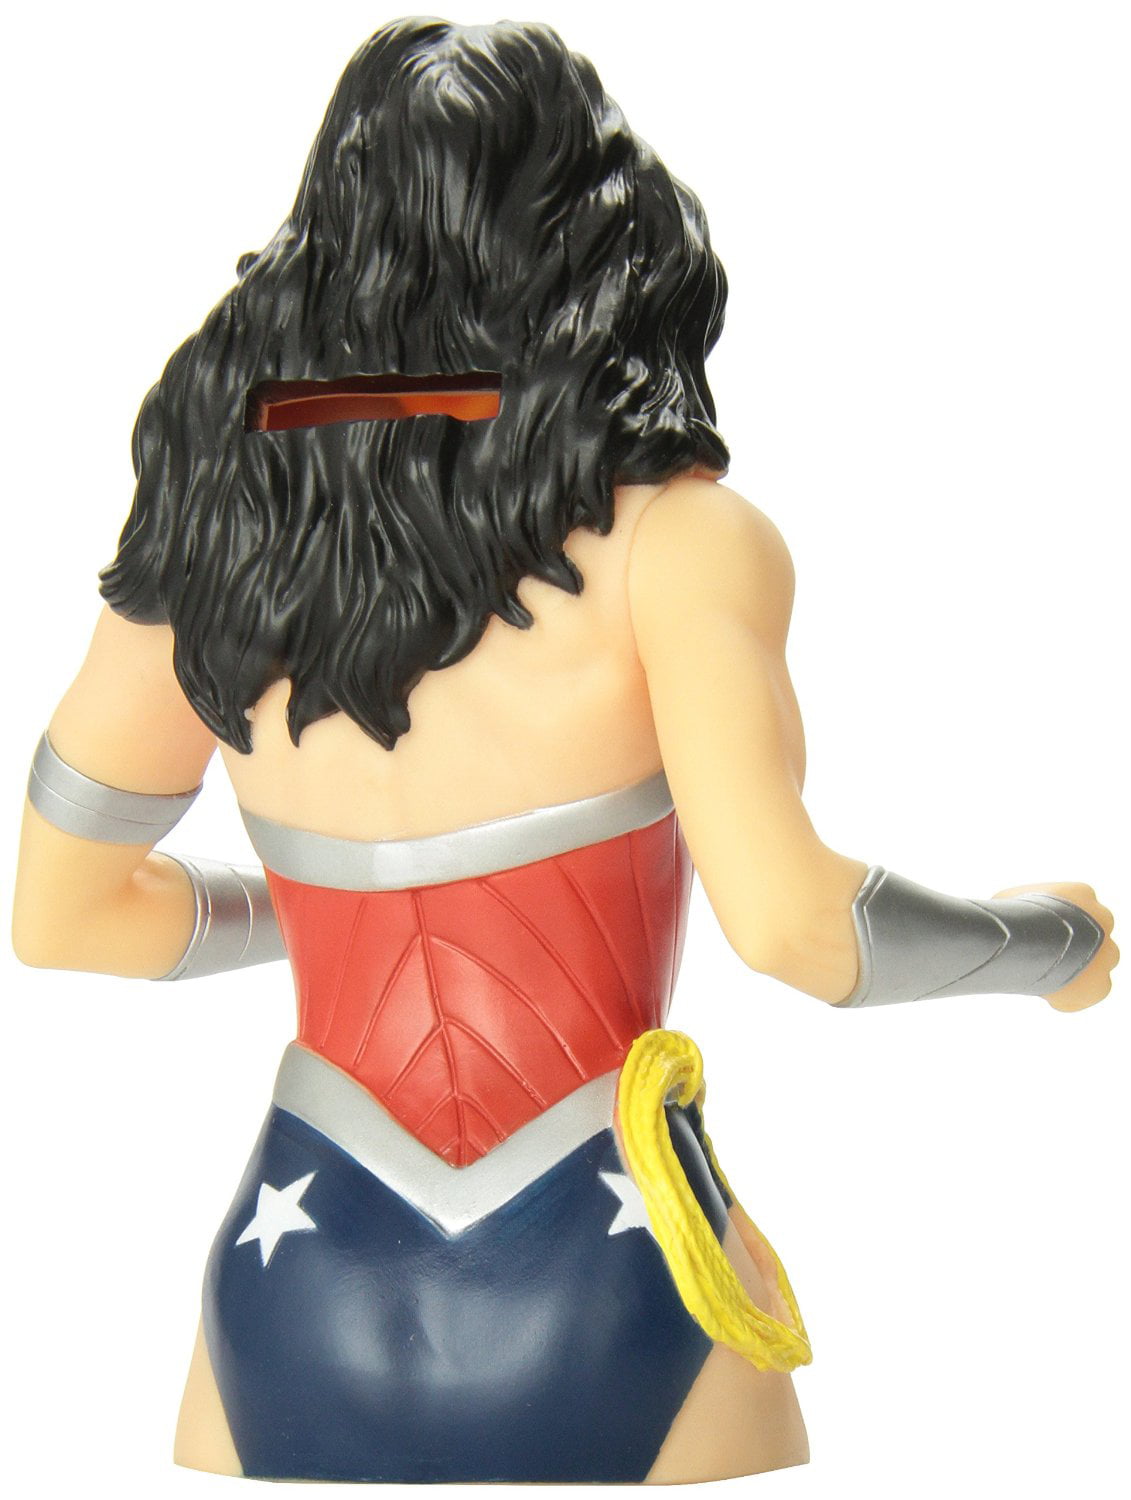 Monogram DC Comics Wonder Woman Bust Coin Bank for sale online 